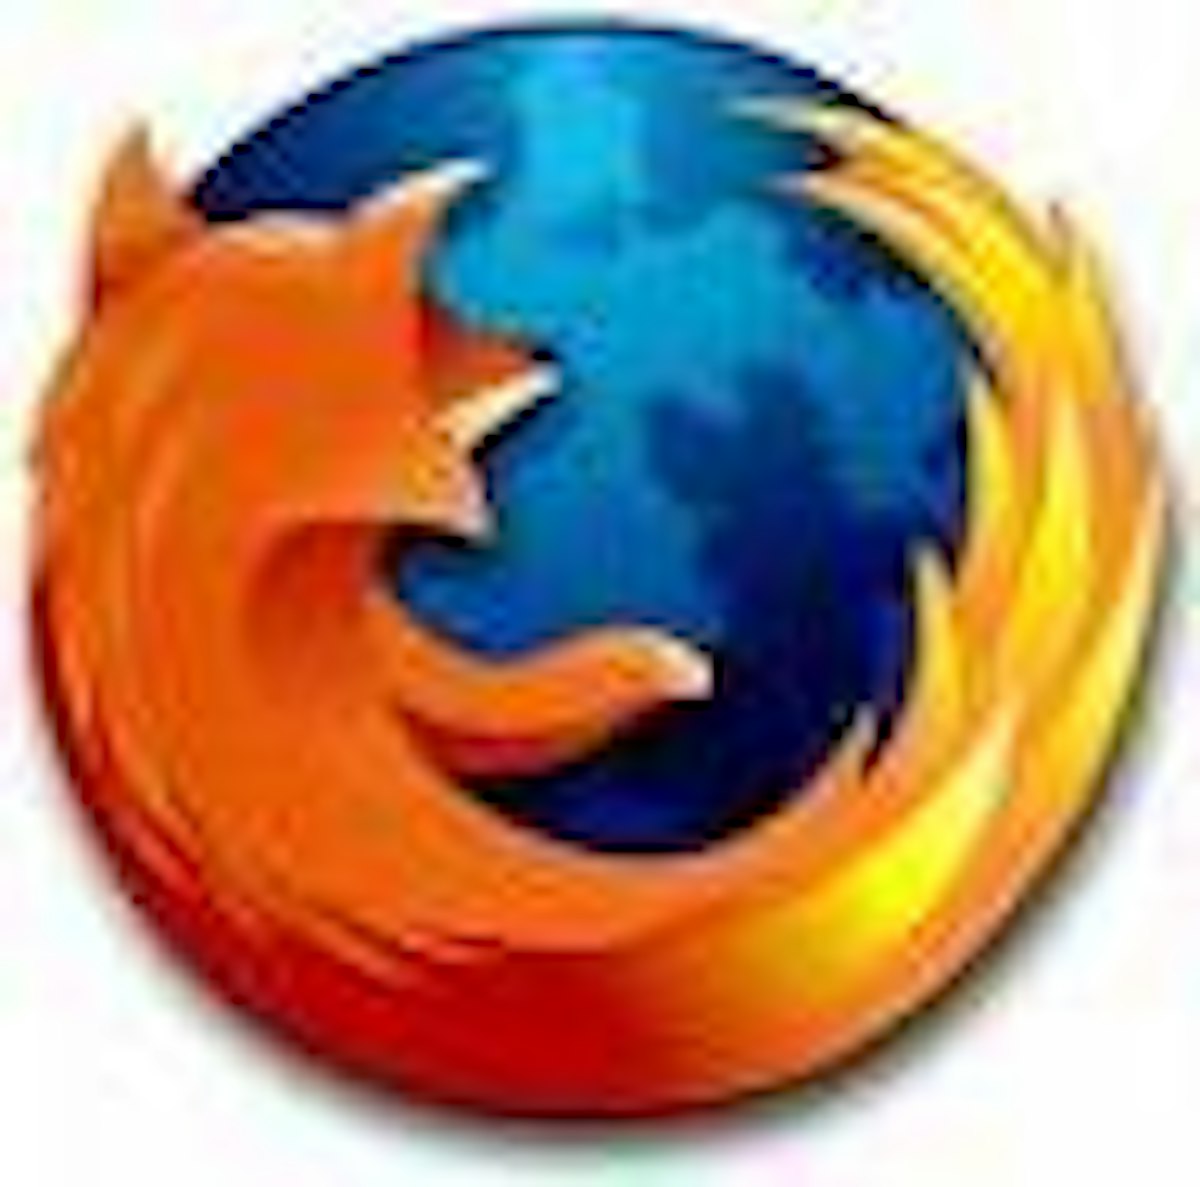  Switch to Firefox, Scrap Internet Explorer